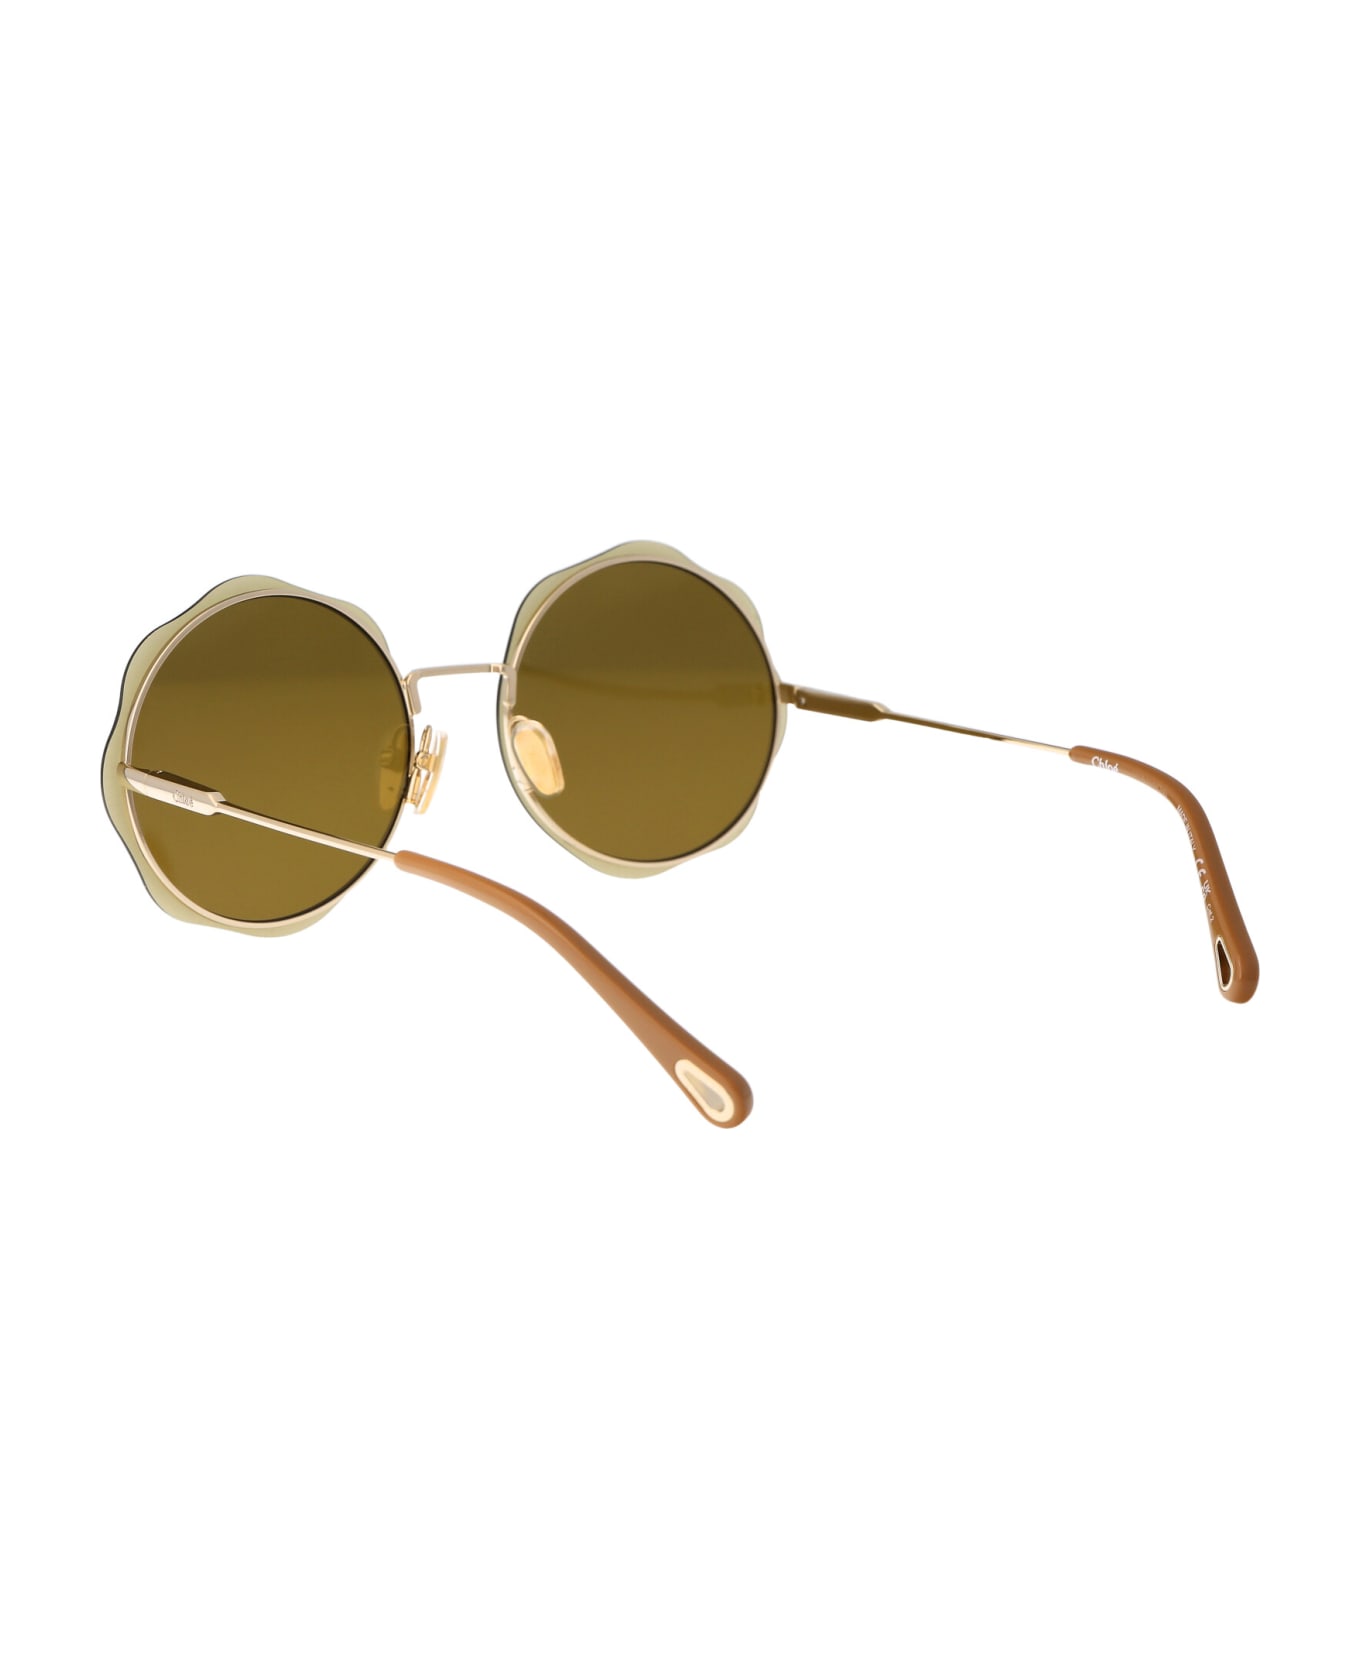 Chloé Eyewear Ch0202s Sunglasses - 001 GOLD GOLD GREEN サングラス